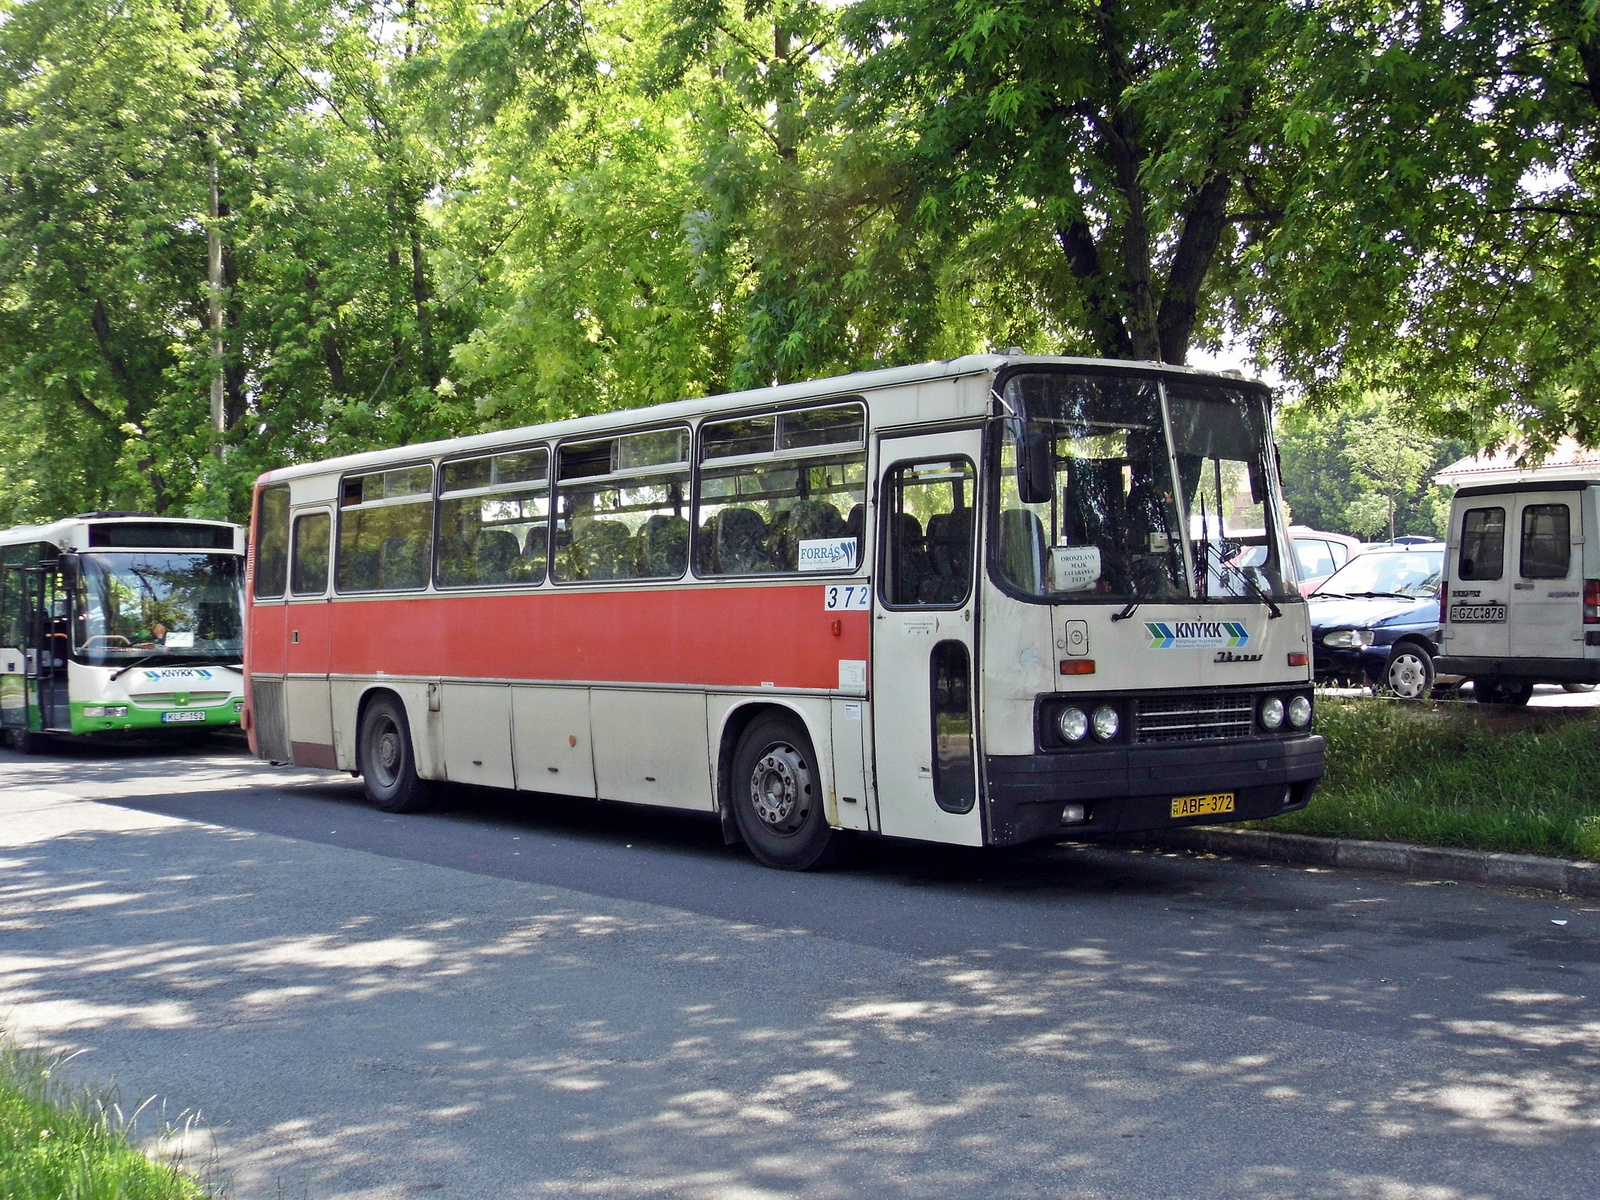 Ikarus 256.50V (ABF-372)